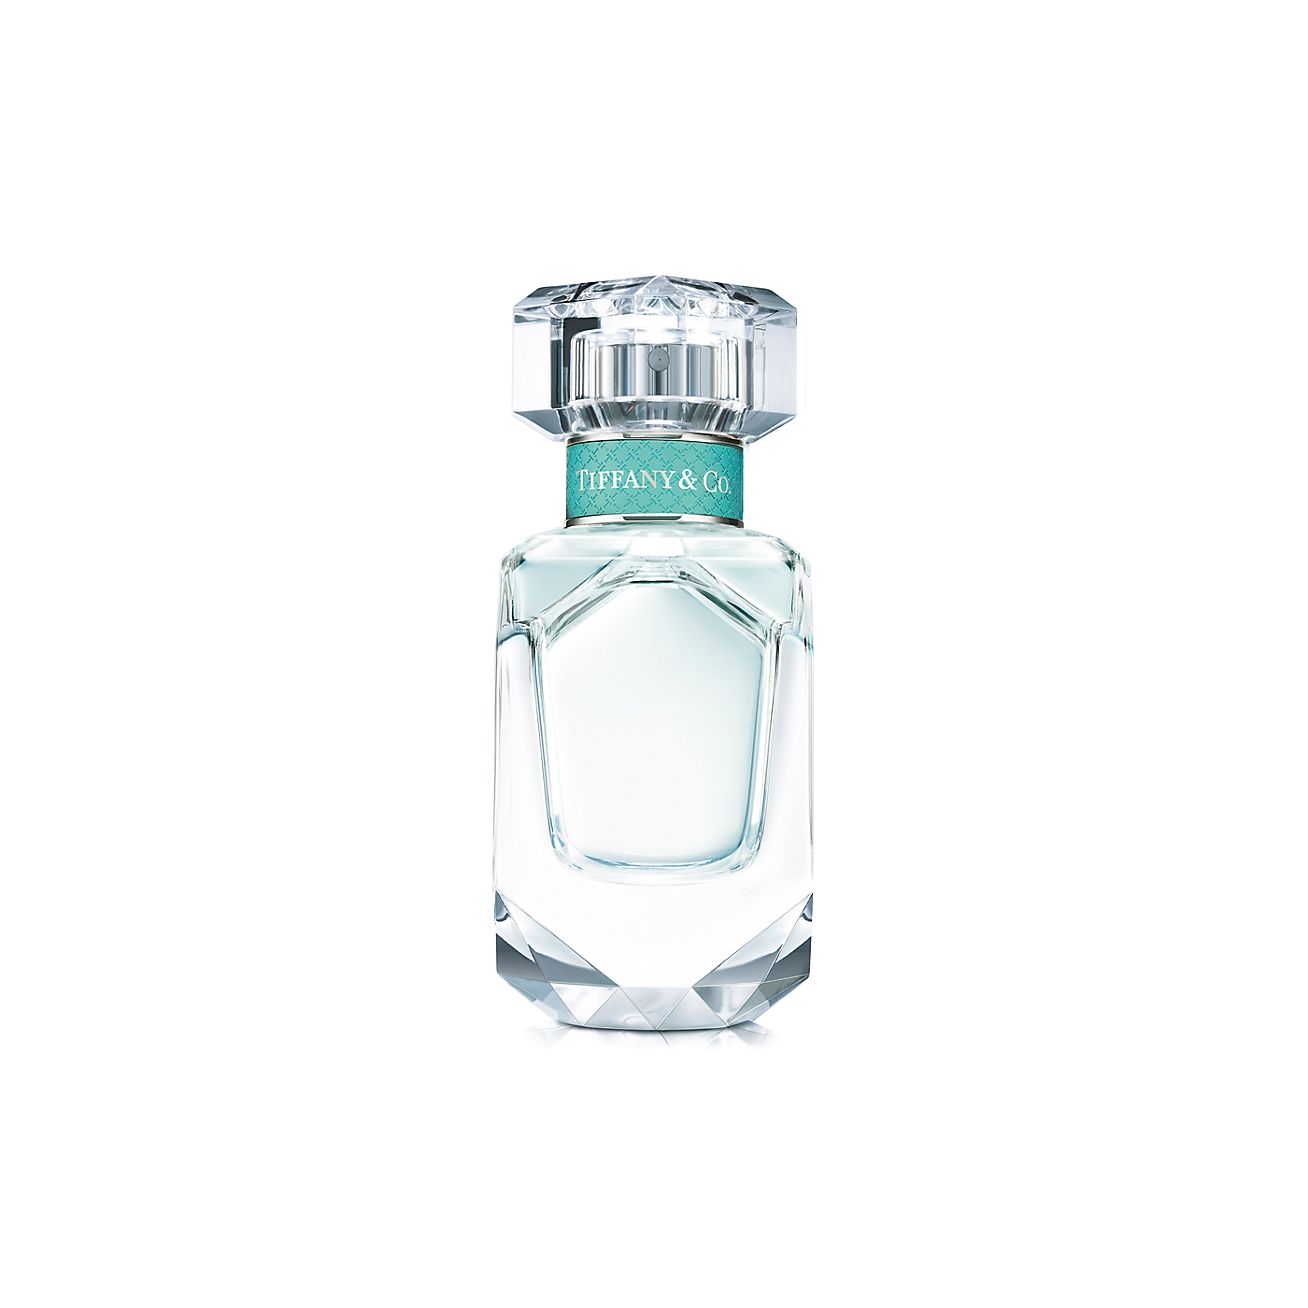 Tiffany eau de parfum, 1.0 ounces 